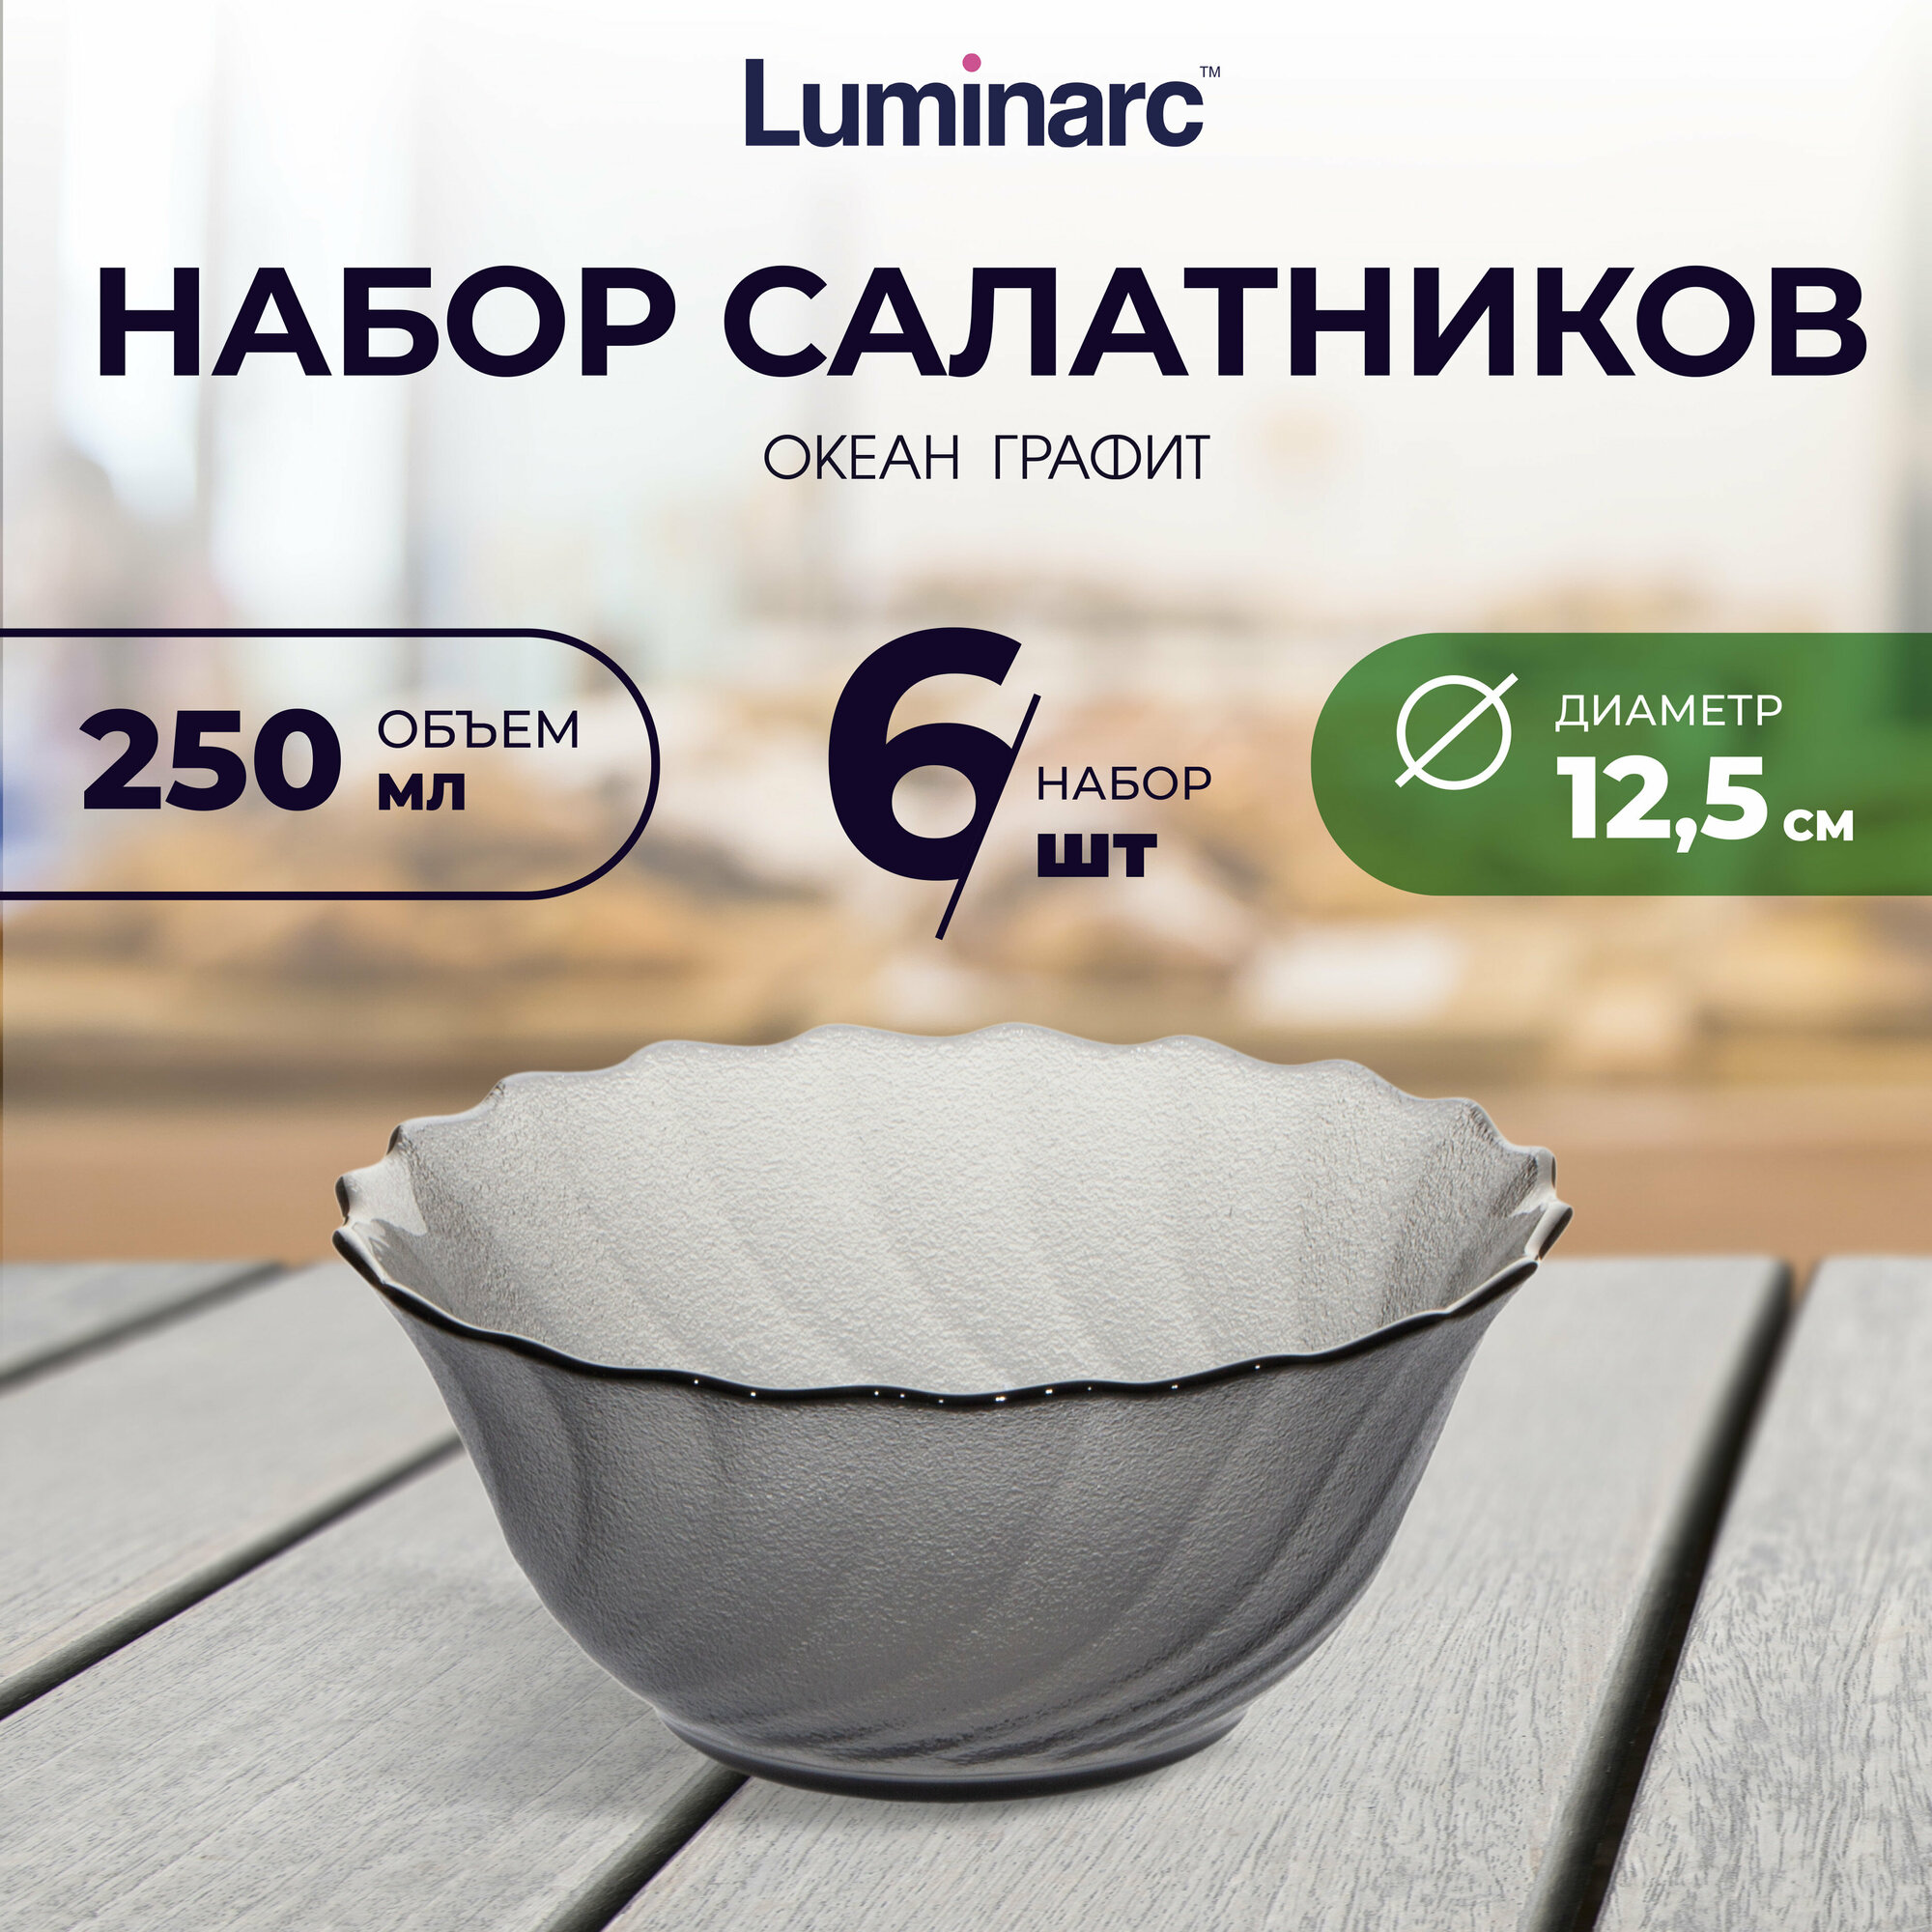 Салатник Luminarc океан графит 12.5 см набор тарелки 6 шт